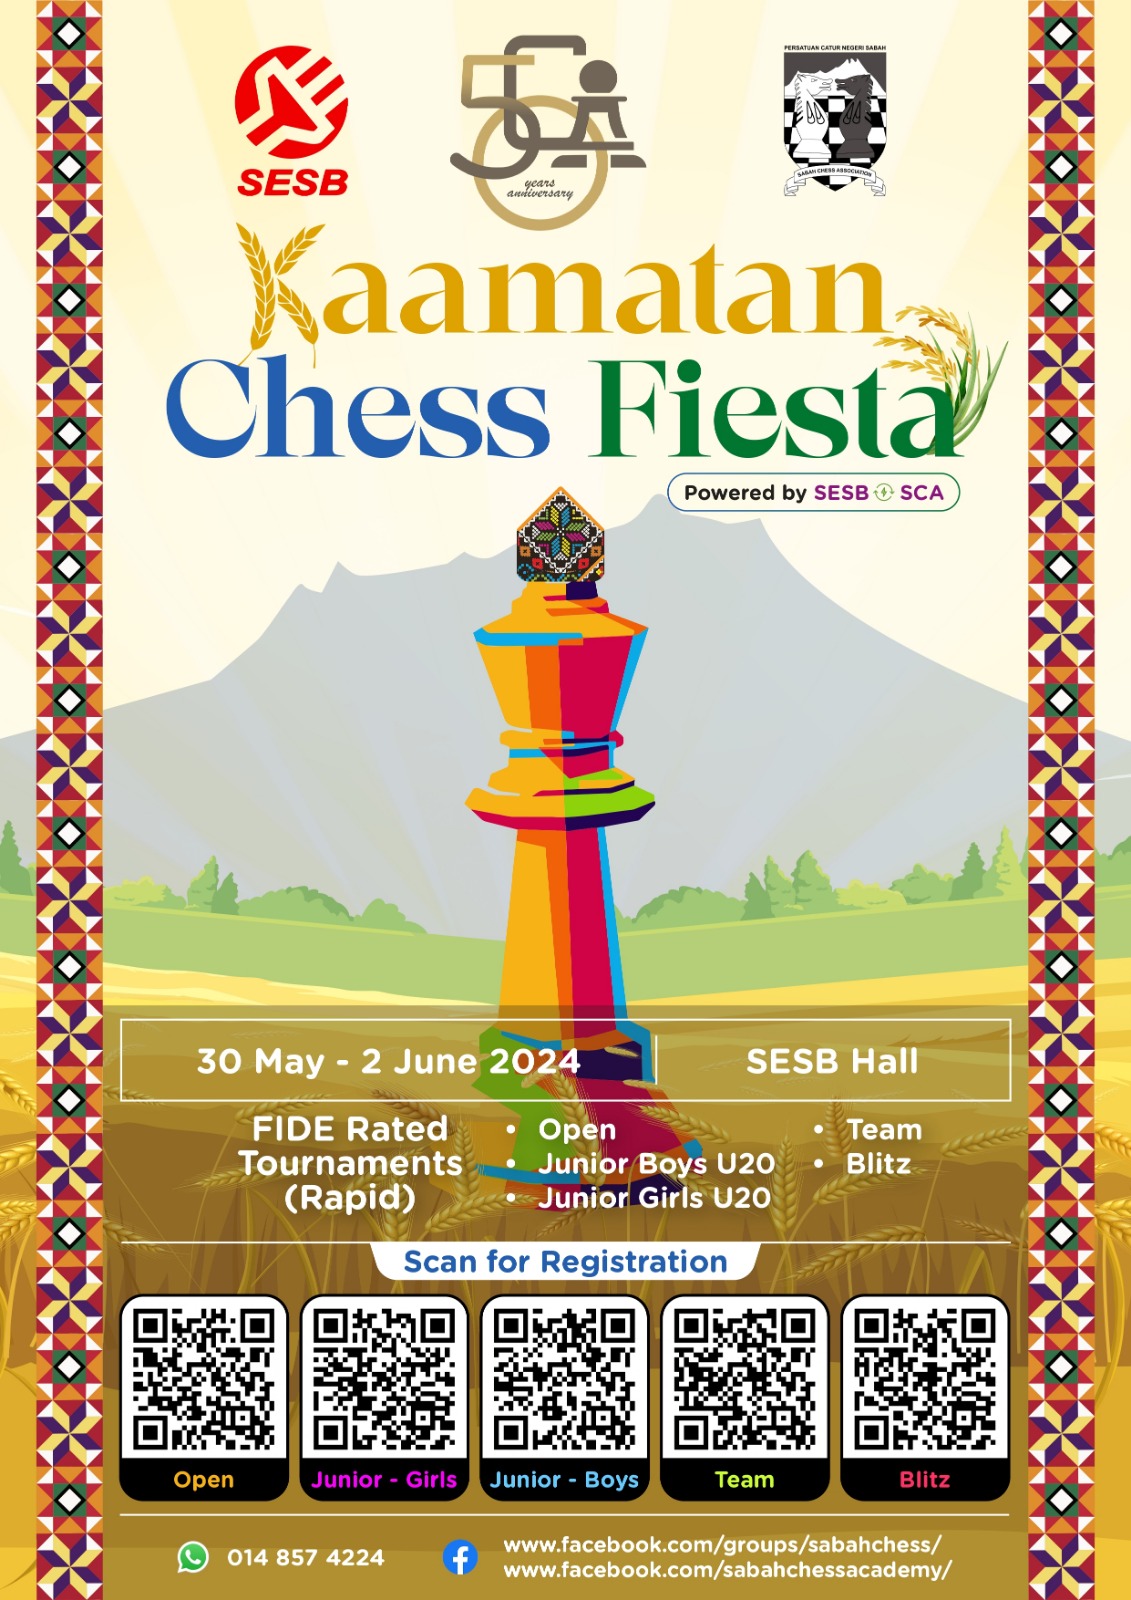 SESB-SCA Kaamatan Chess Team Chess (FIDE Rapid Rated)